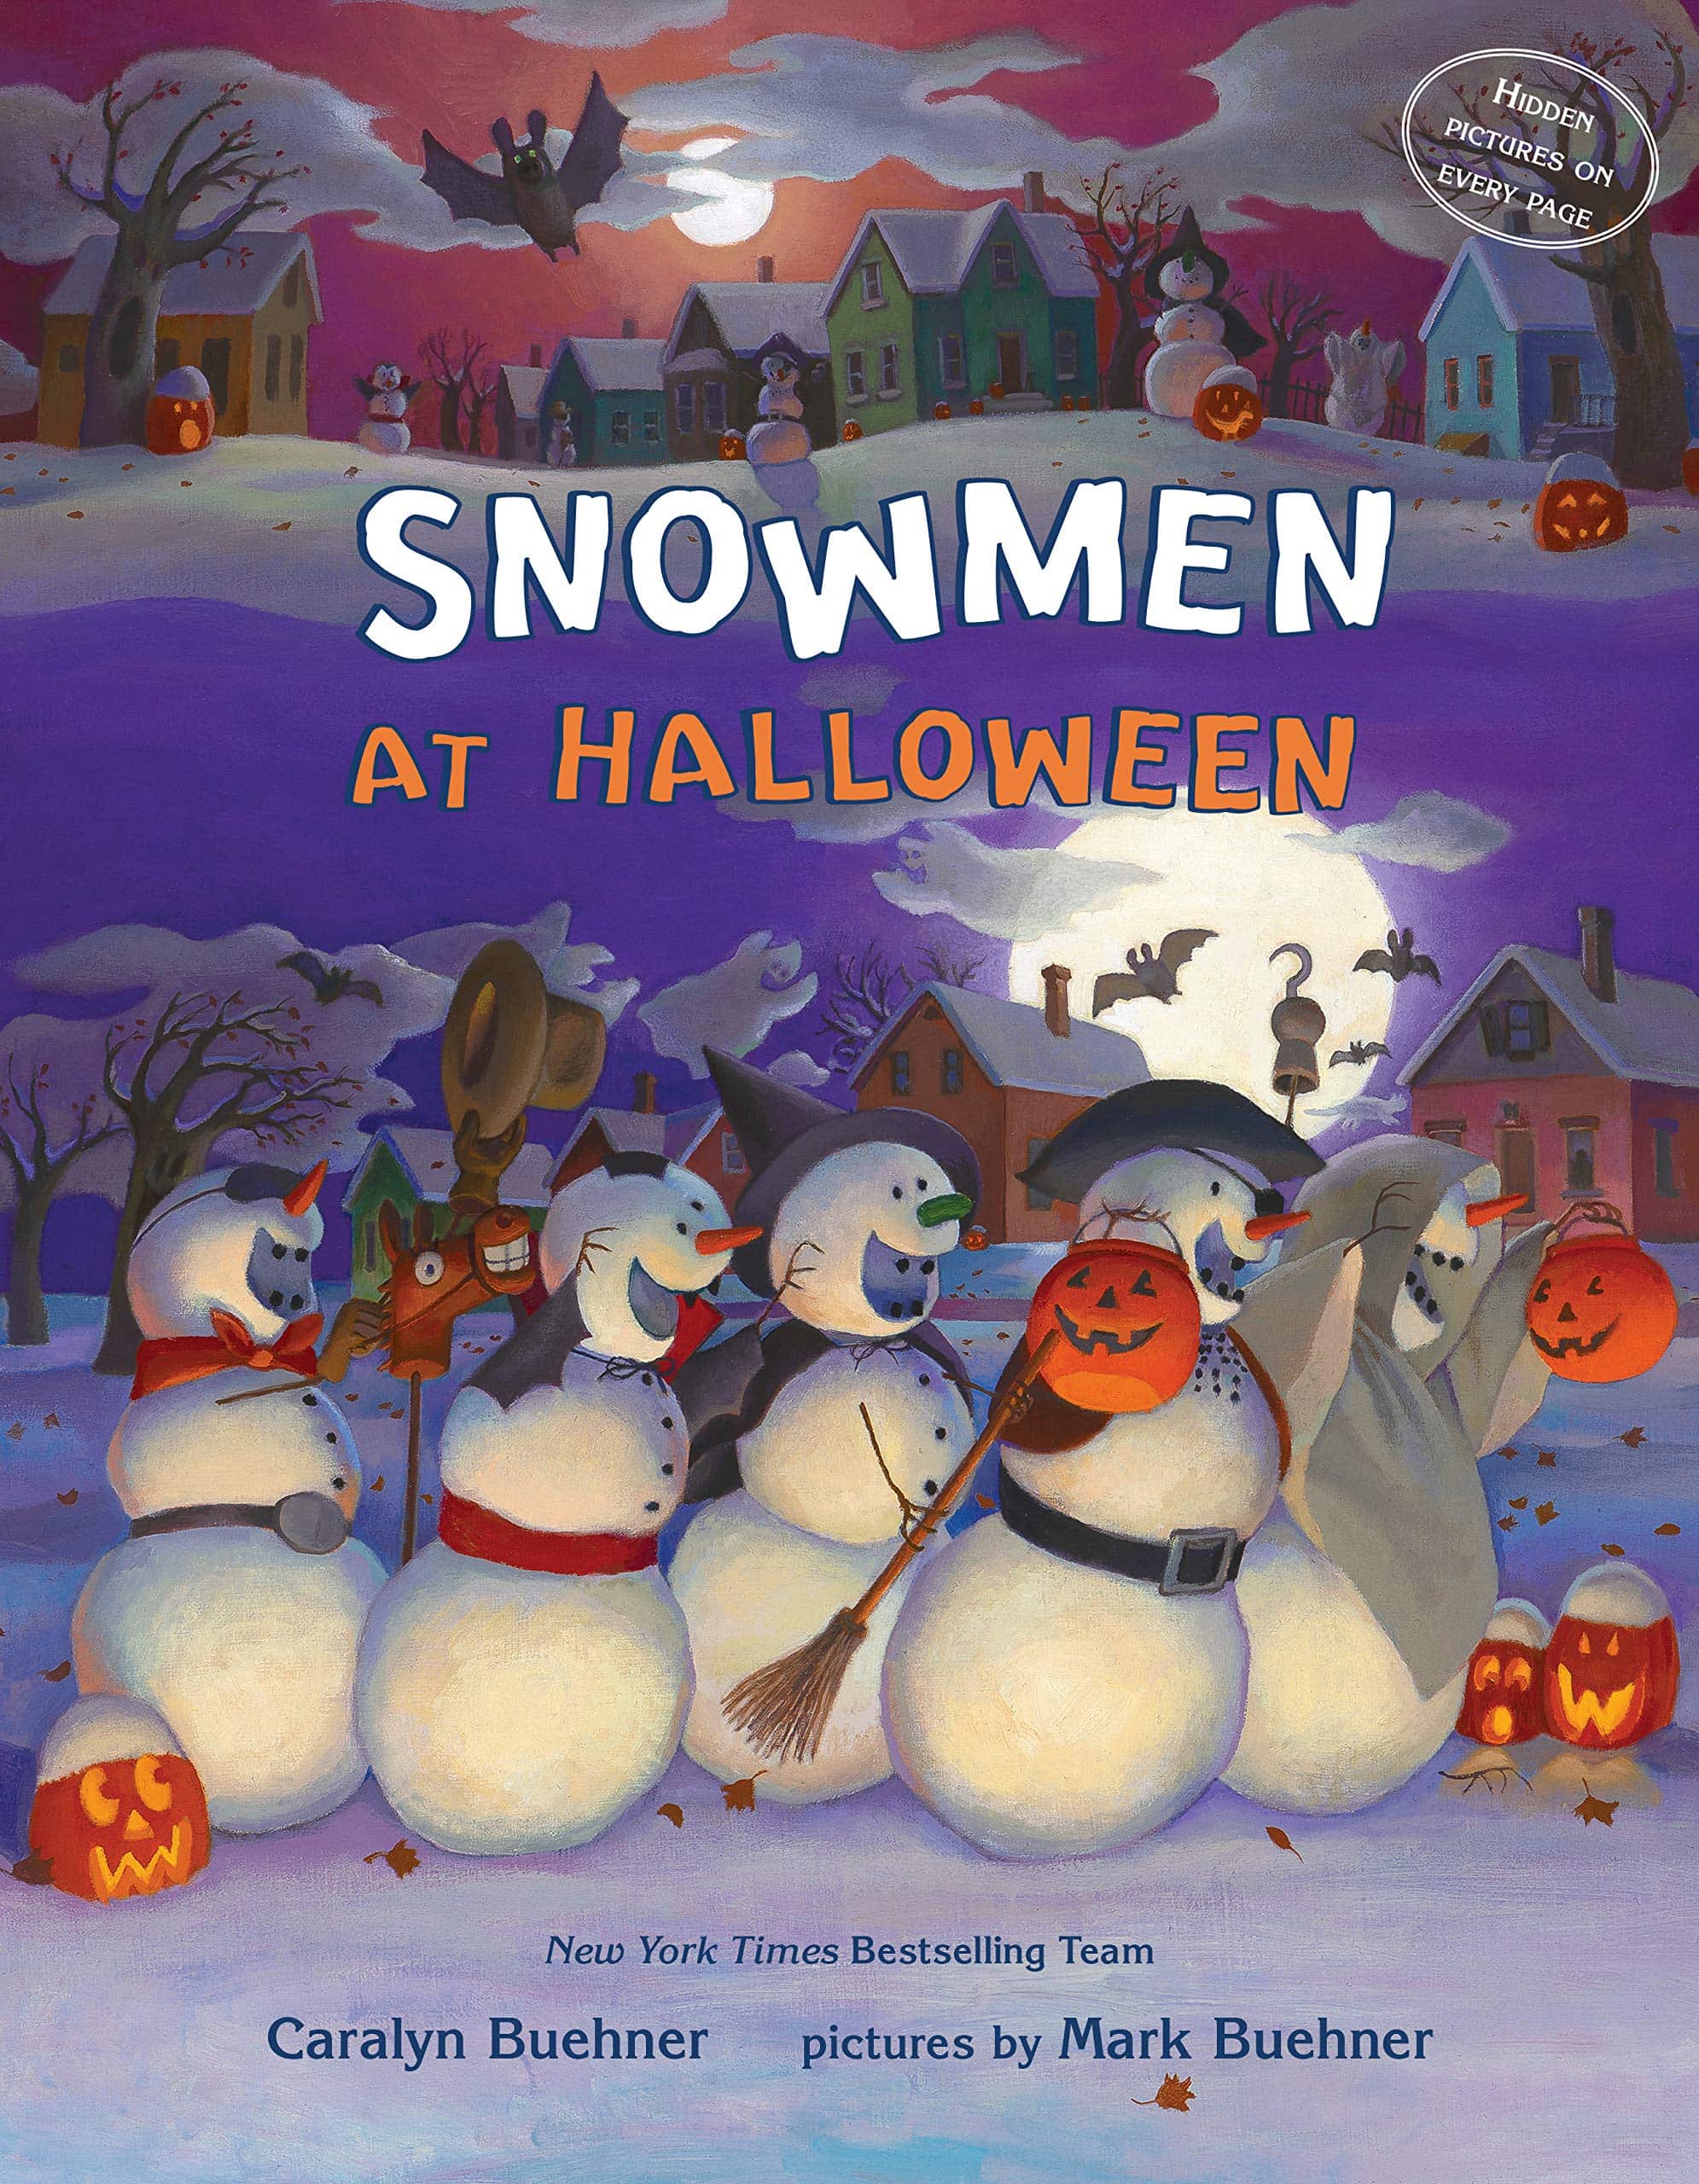 "Snowmen at Halloween" by Caralyn Buehner